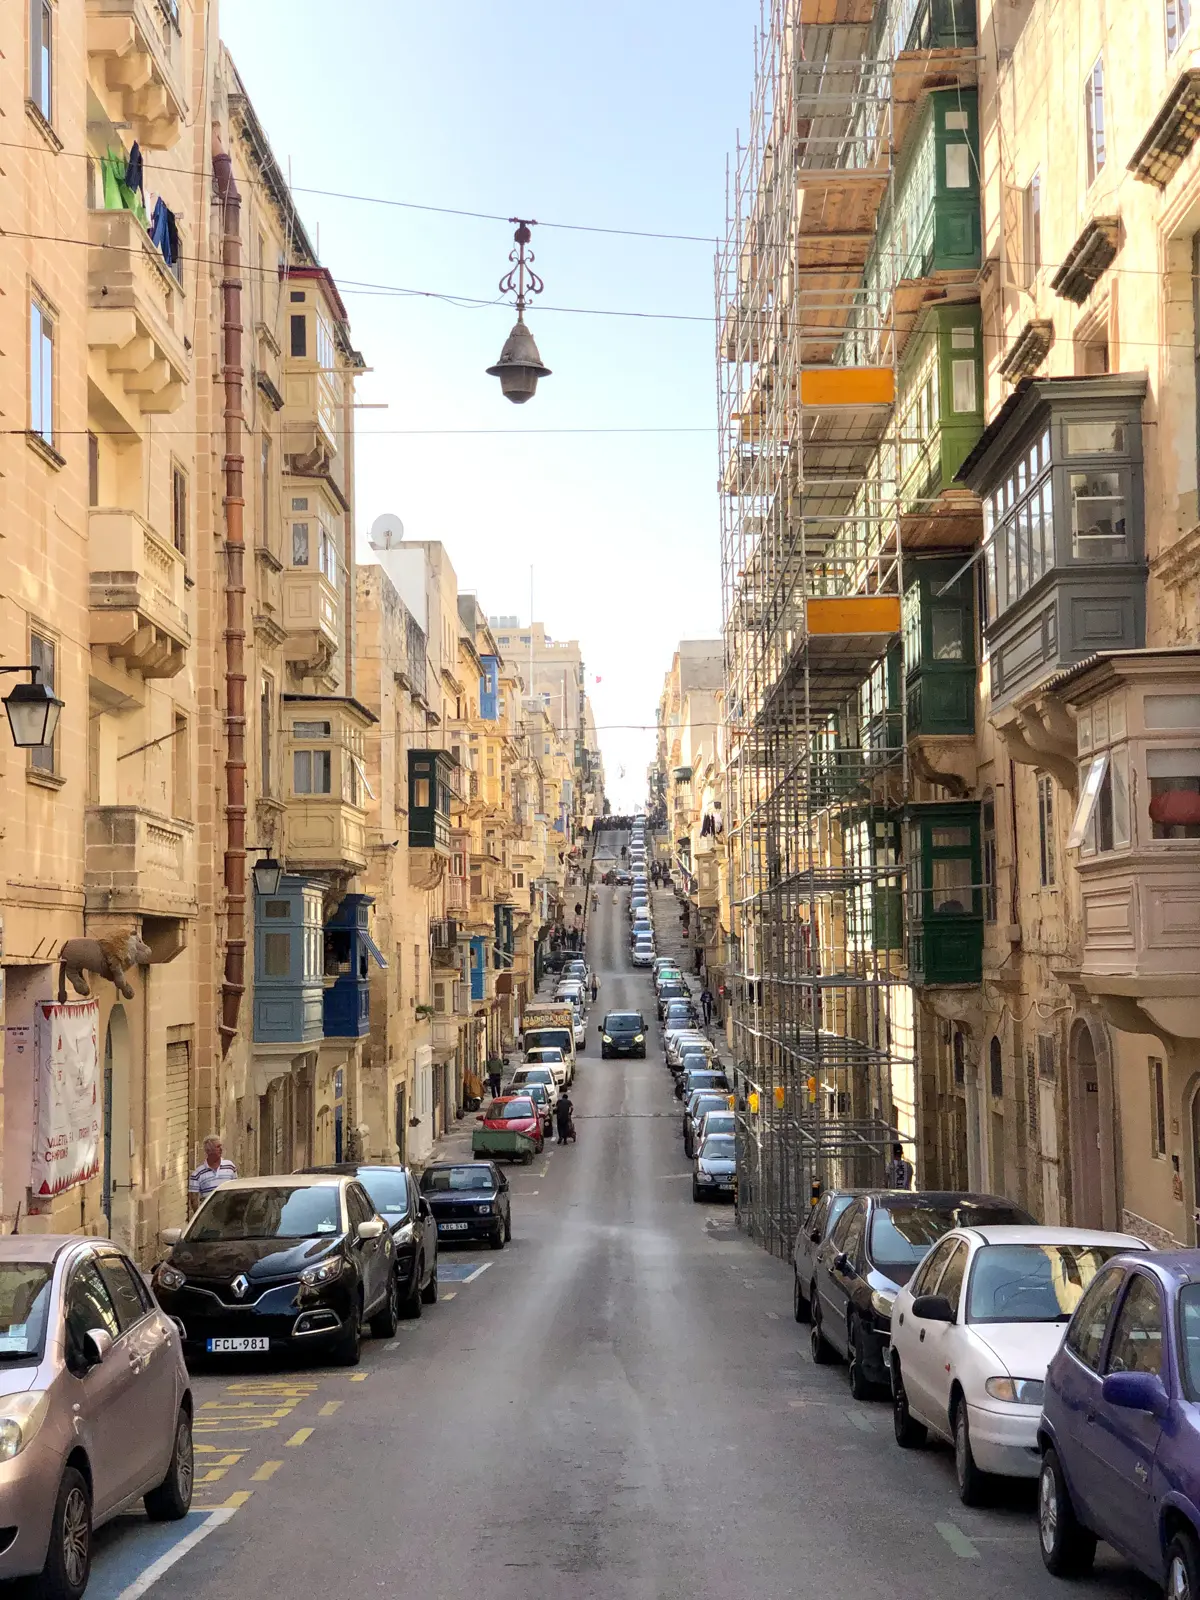 Main roads running the length of the Valletta